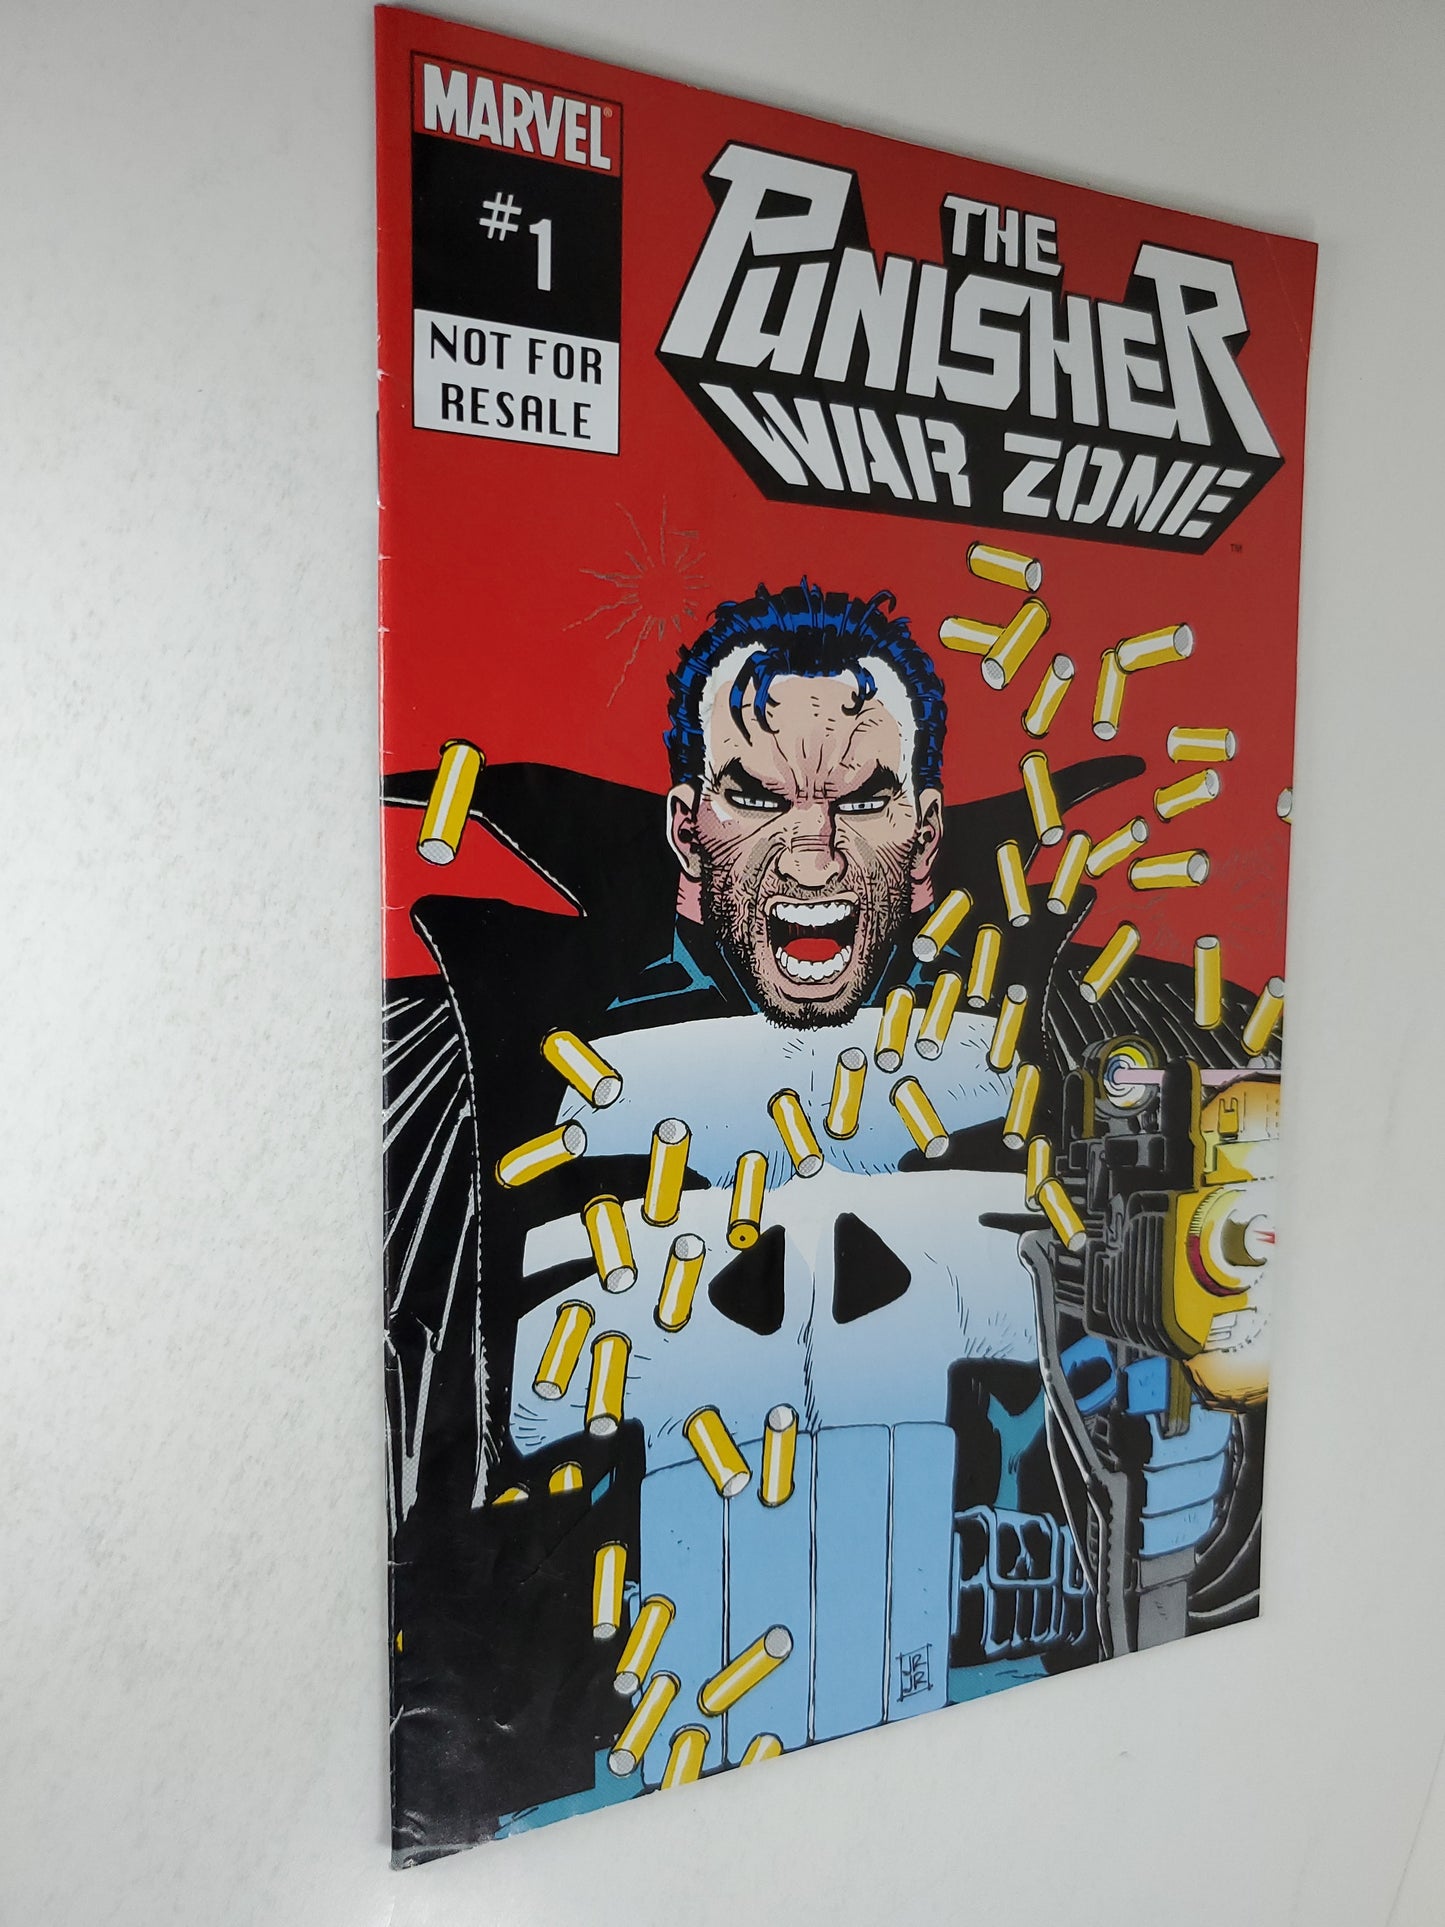 Marvel Punisher War Zone Vol 1 #1 (2 bks-Die-cut cover & Regular)